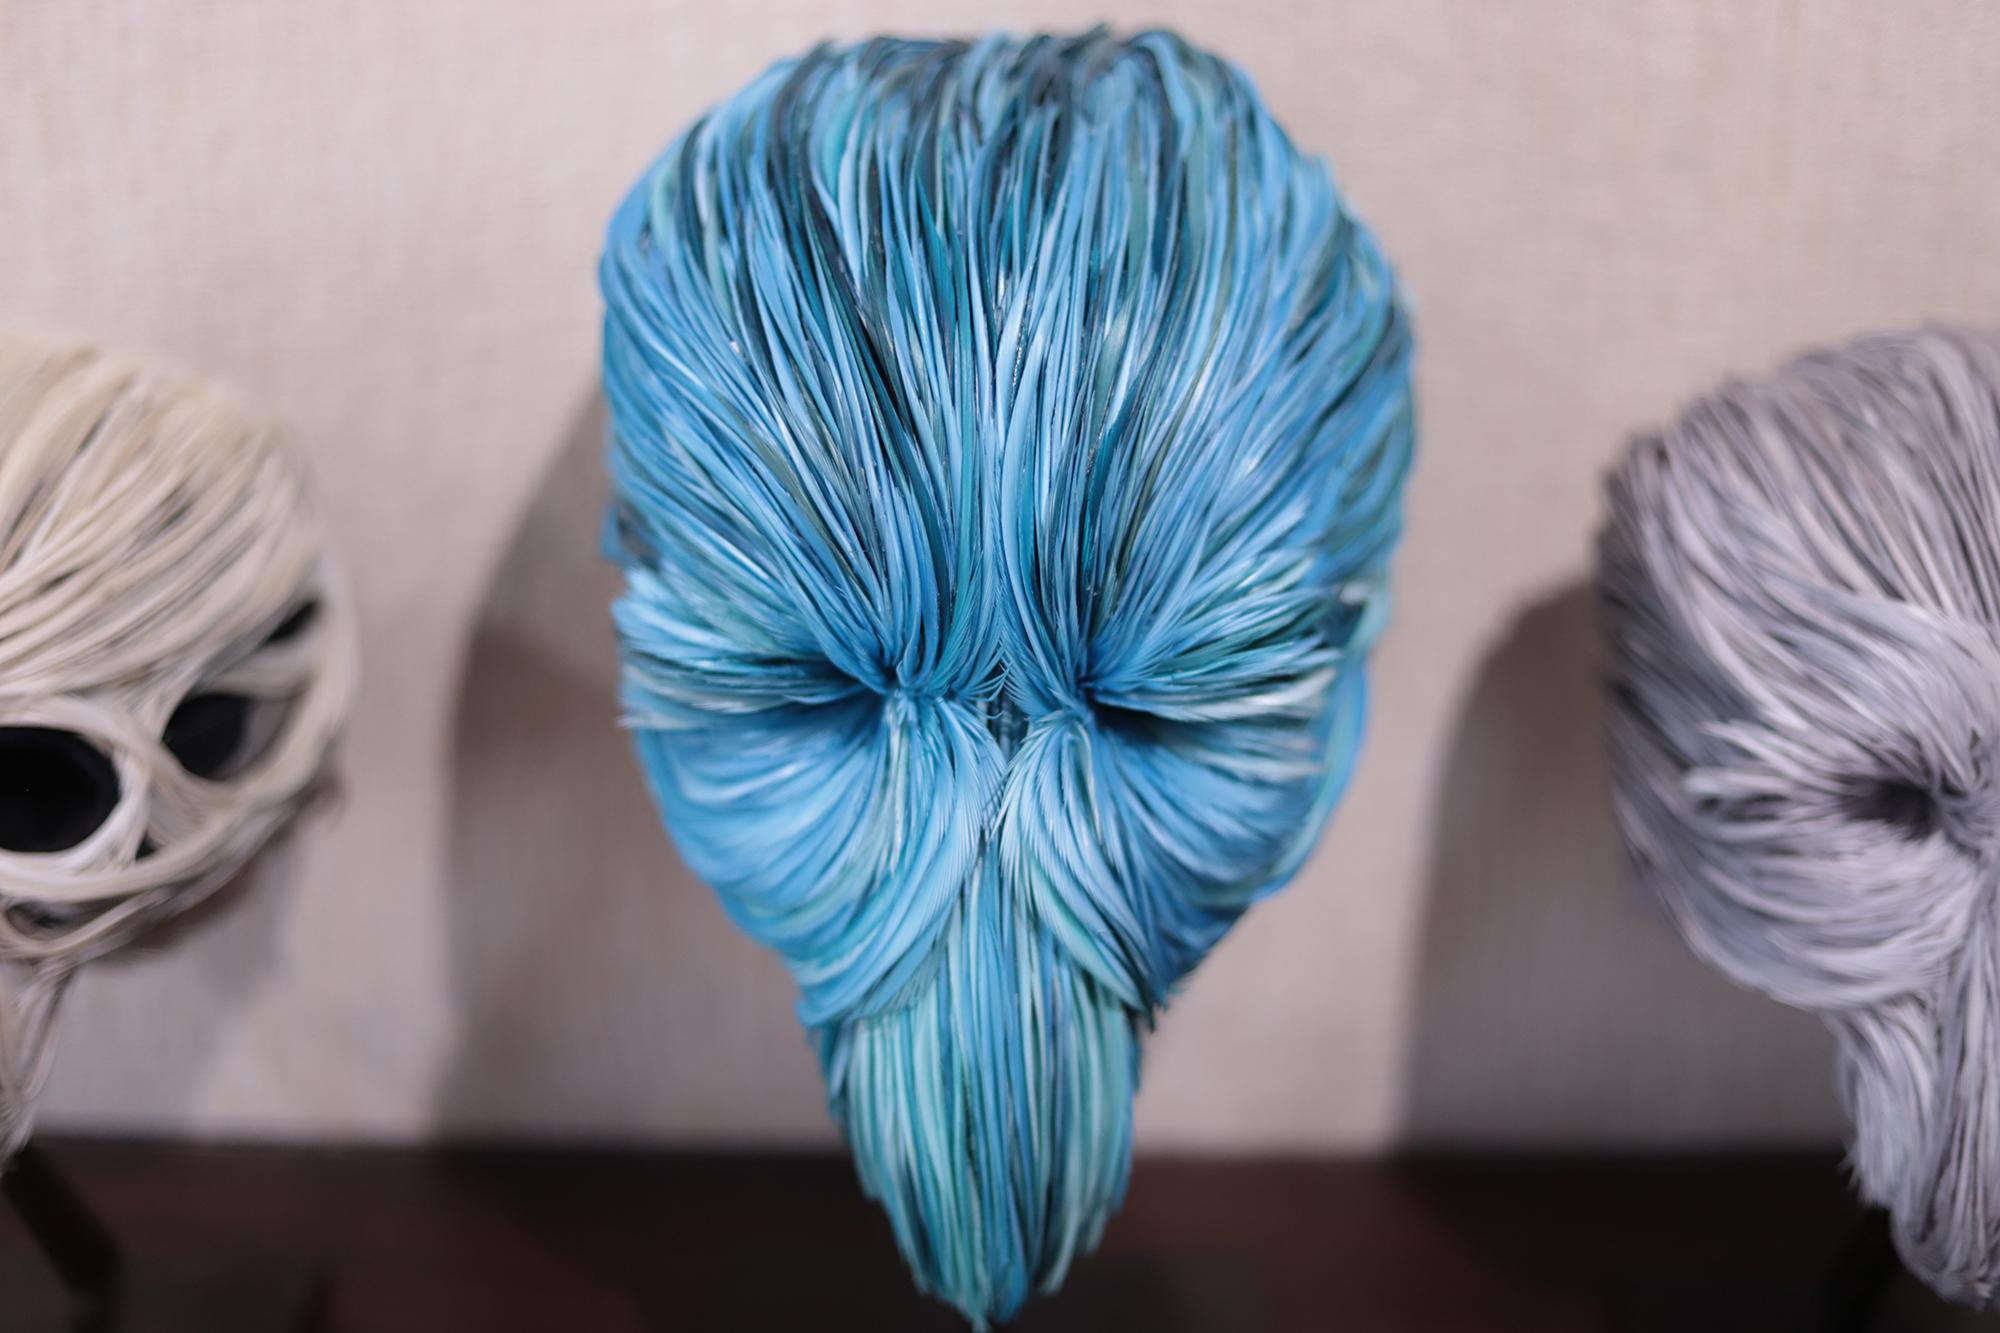 Esther blue feathers sculpture skull vanité on resin sculpture by L. Le Constant 2